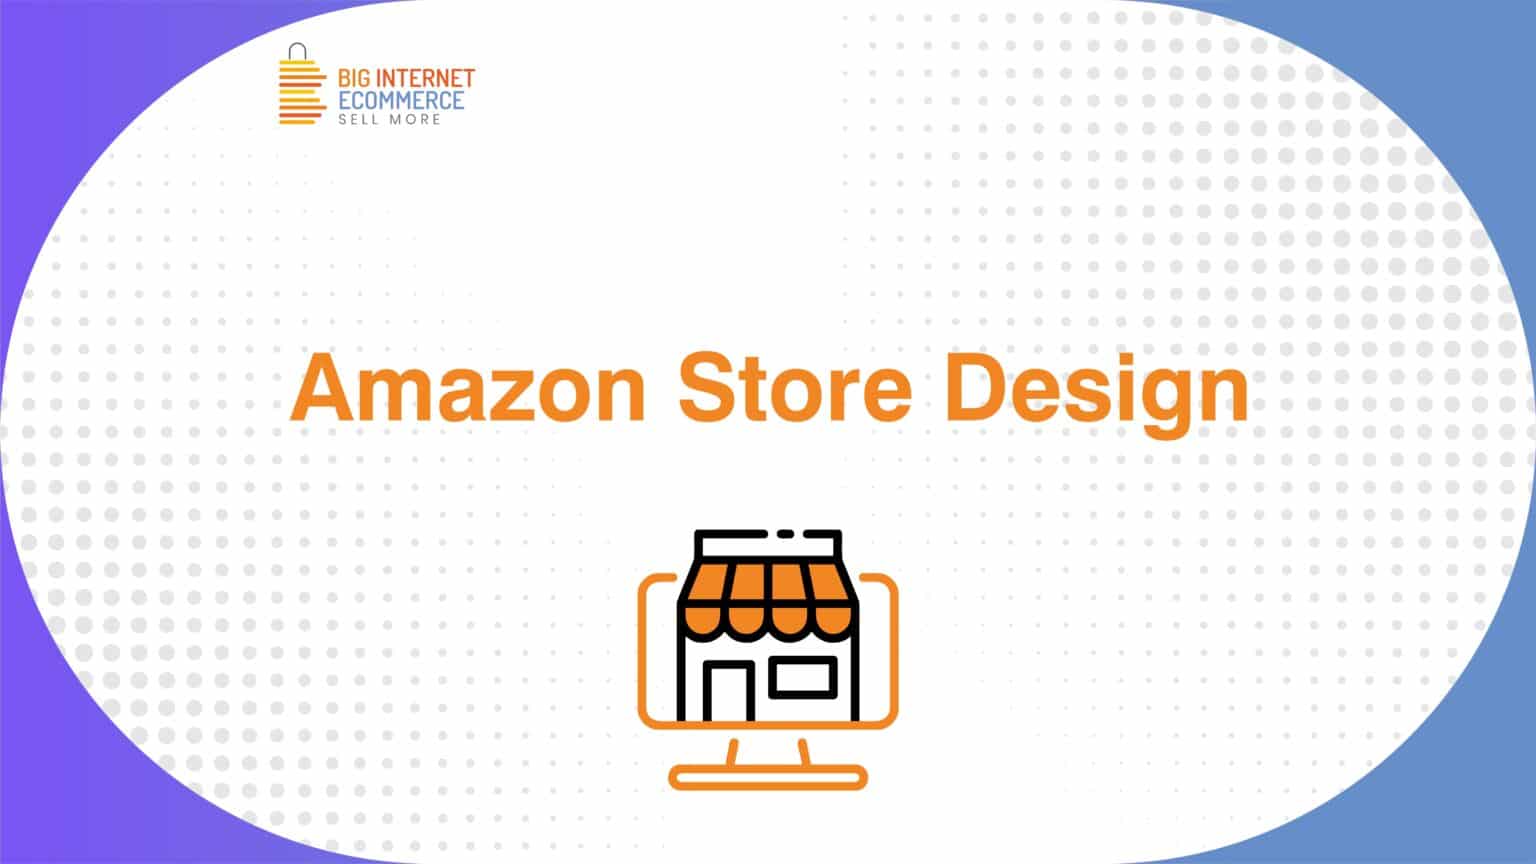 Big_Internet_Ecommerce_Amazon_Store_Design